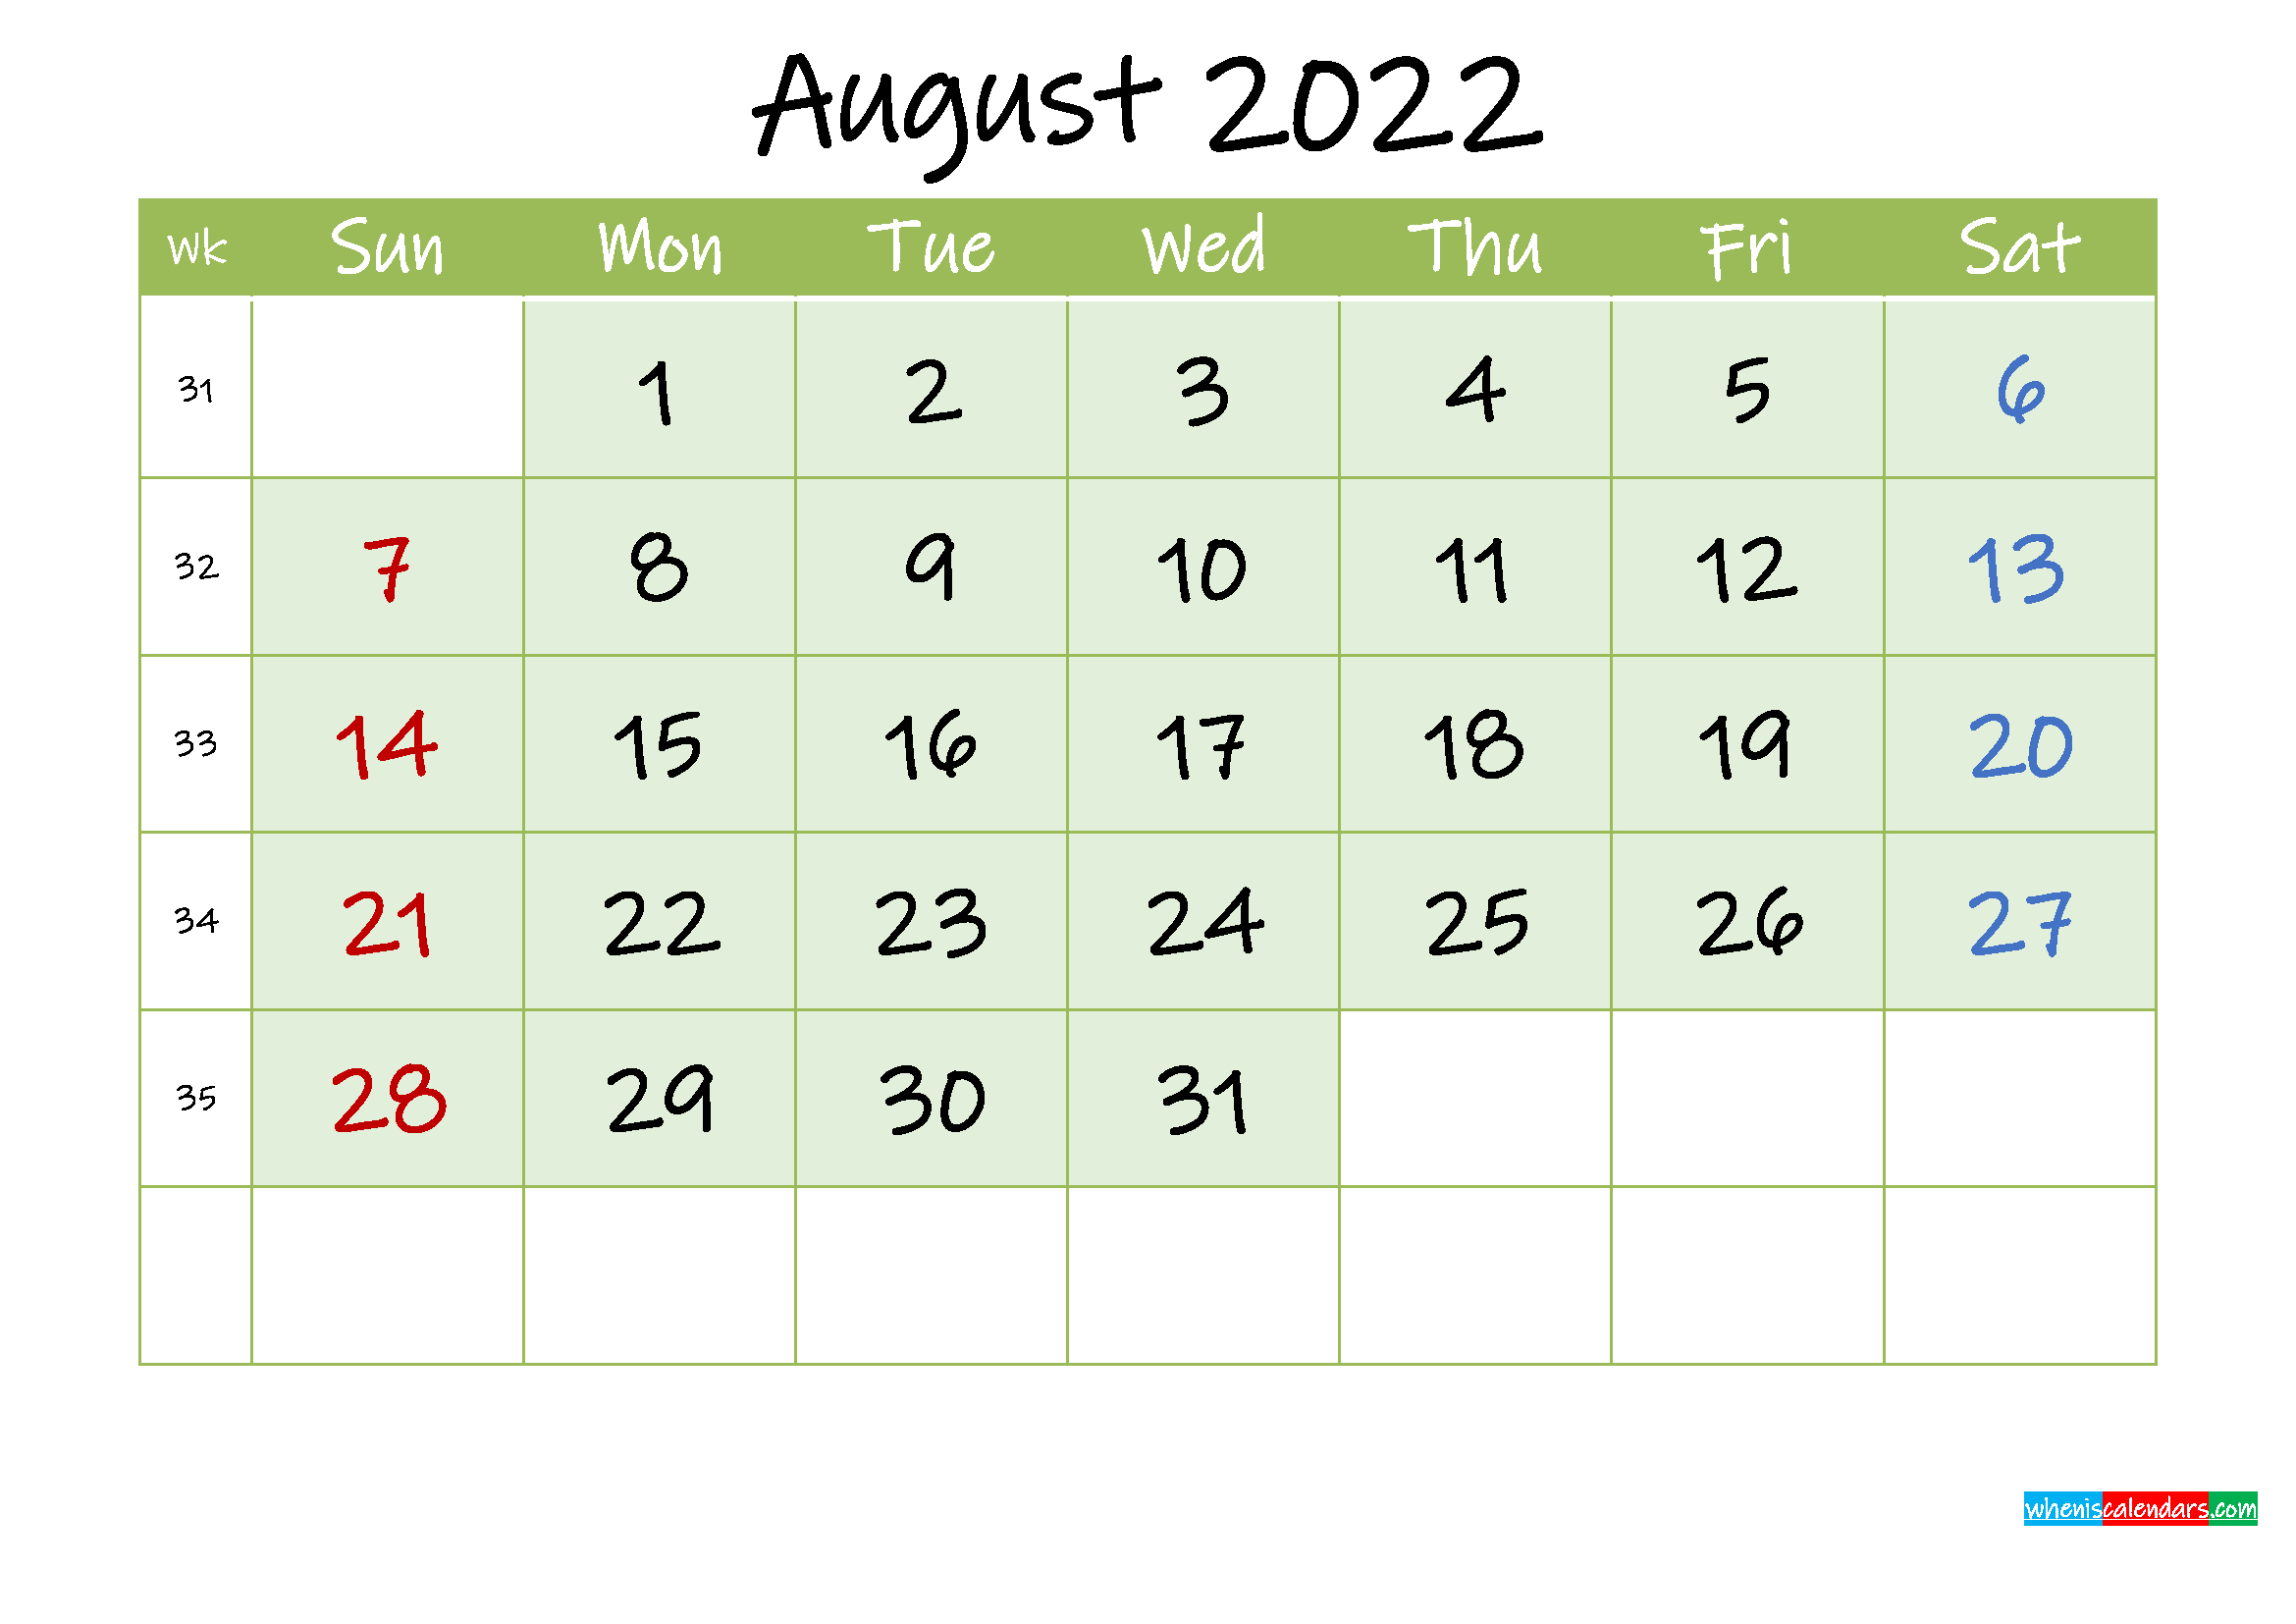 August 2022 Free Printable Calendar  Template Ink22M128 with regard to August 2022 Printable Calendar